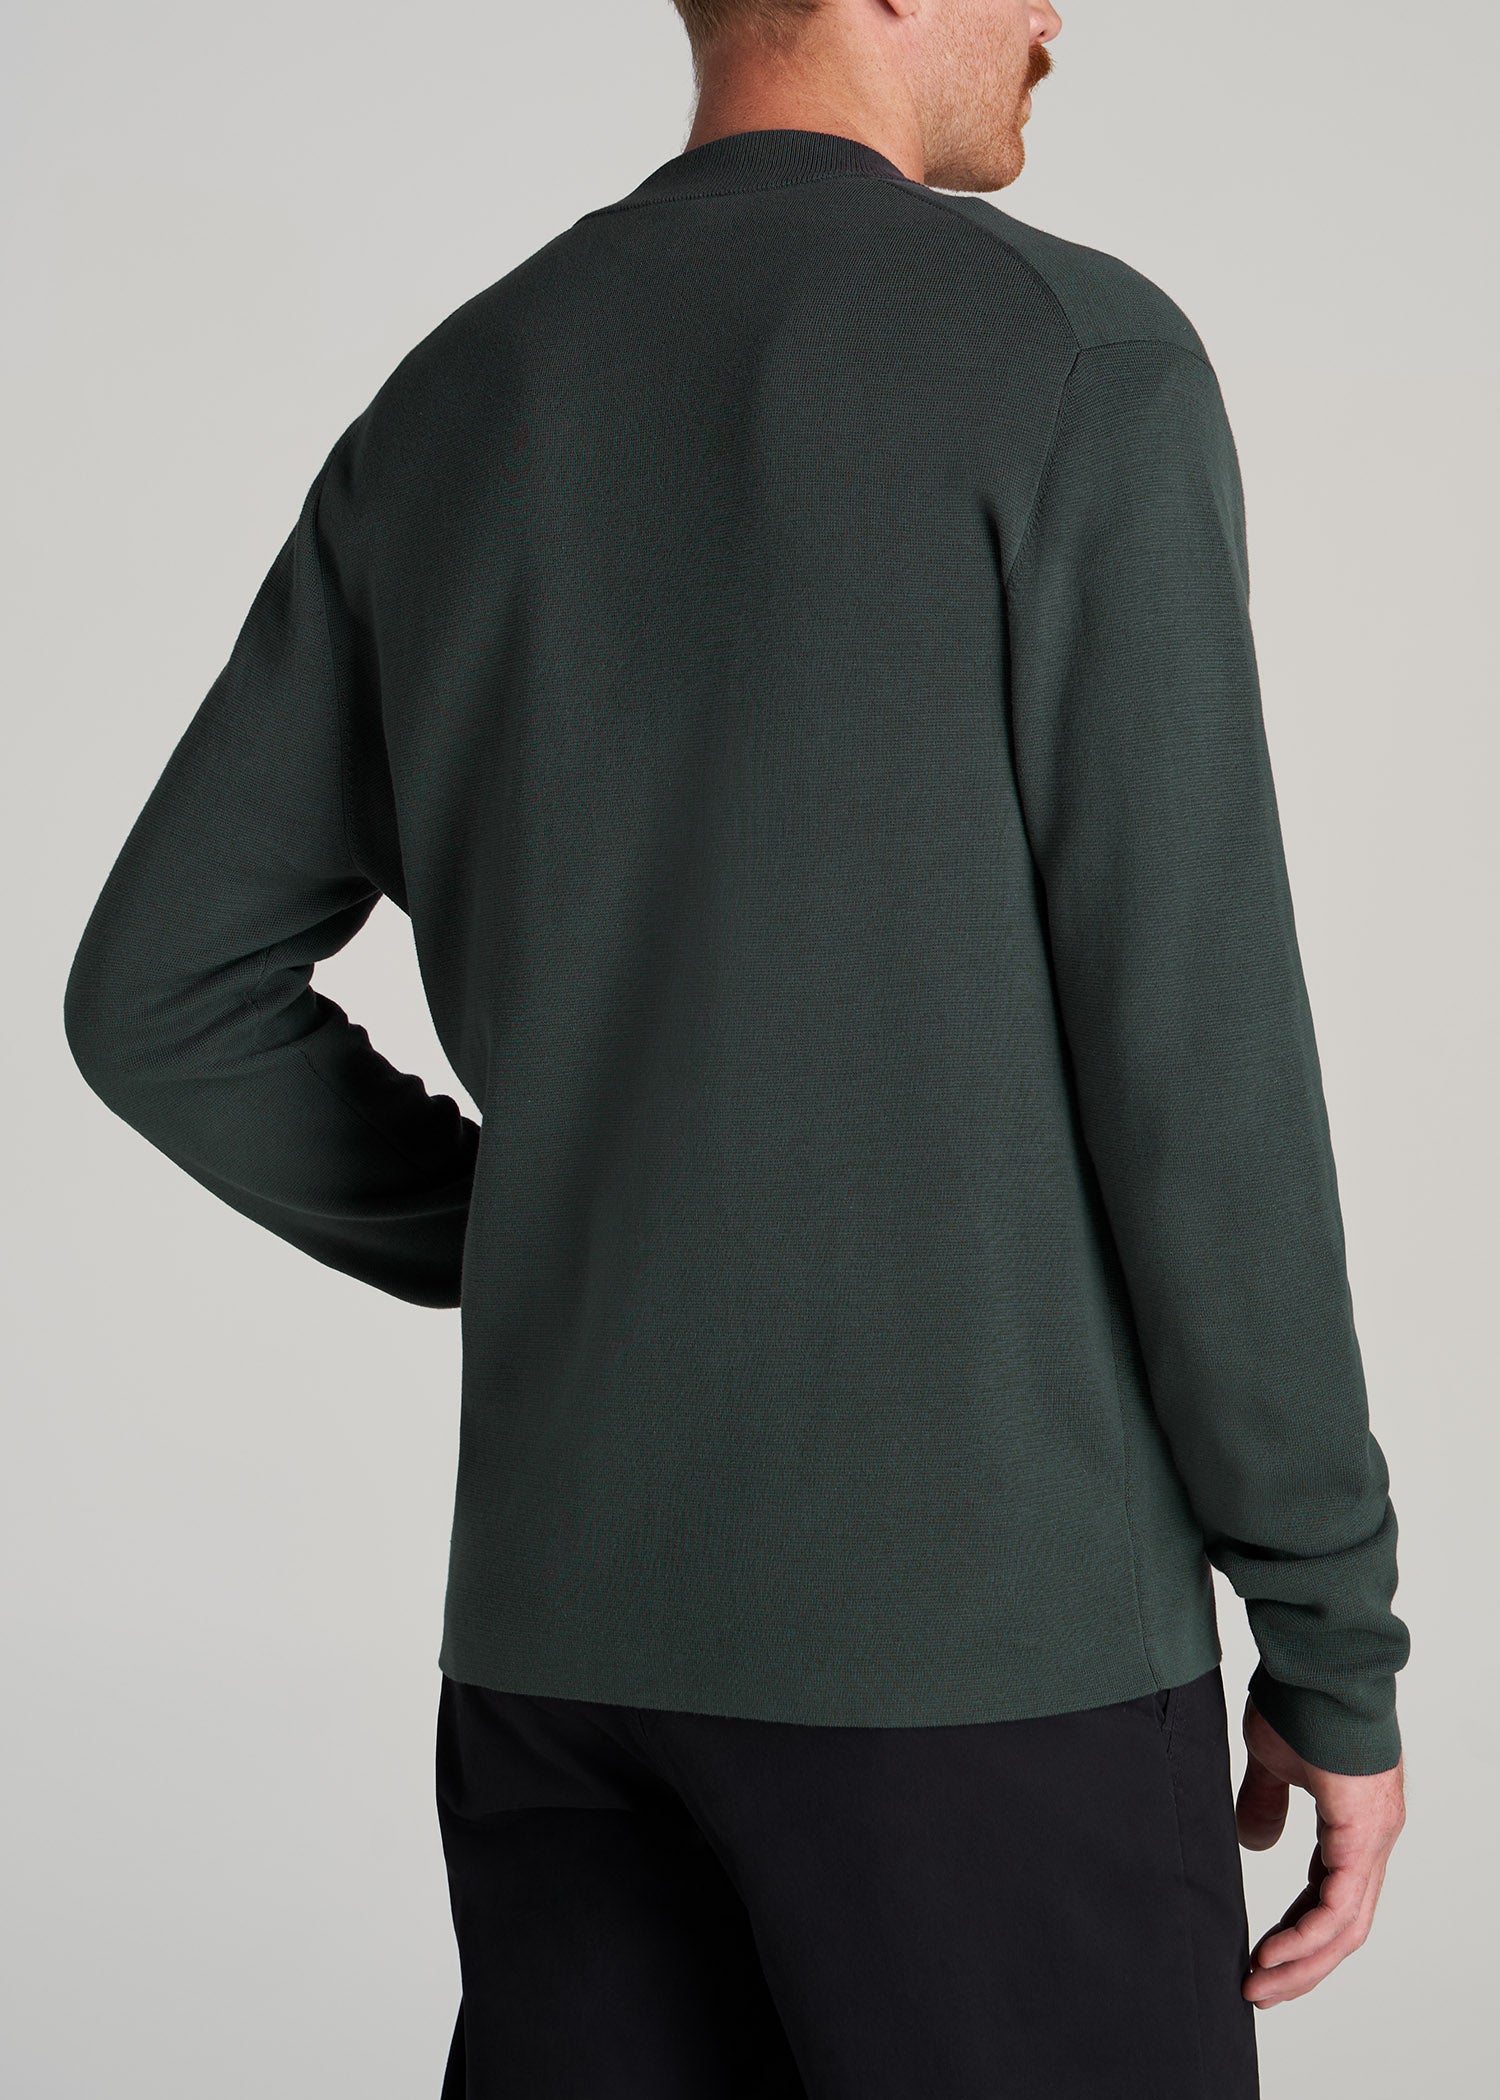 Full-Zip Baseball Collar Sweater for Tall Men in Dark Cyan M / Tall / Dark Cyan